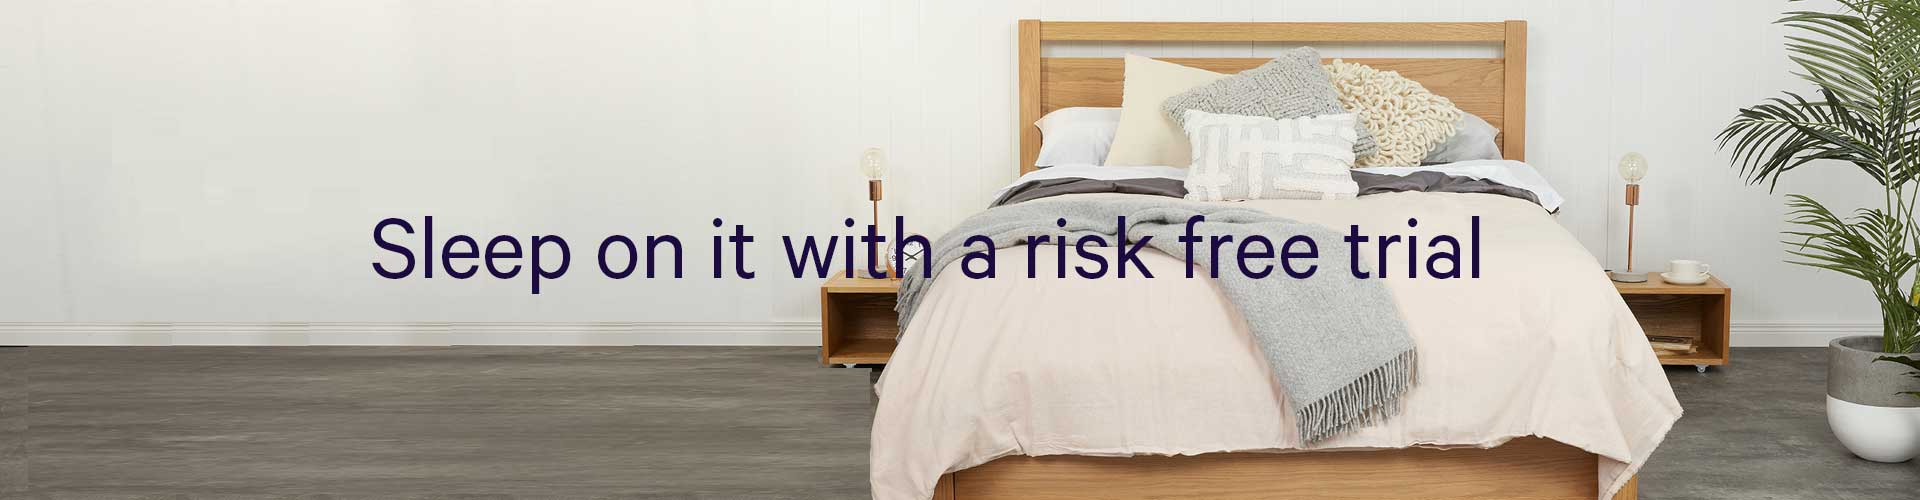 Buy mattress online with risk free trial - Springtek